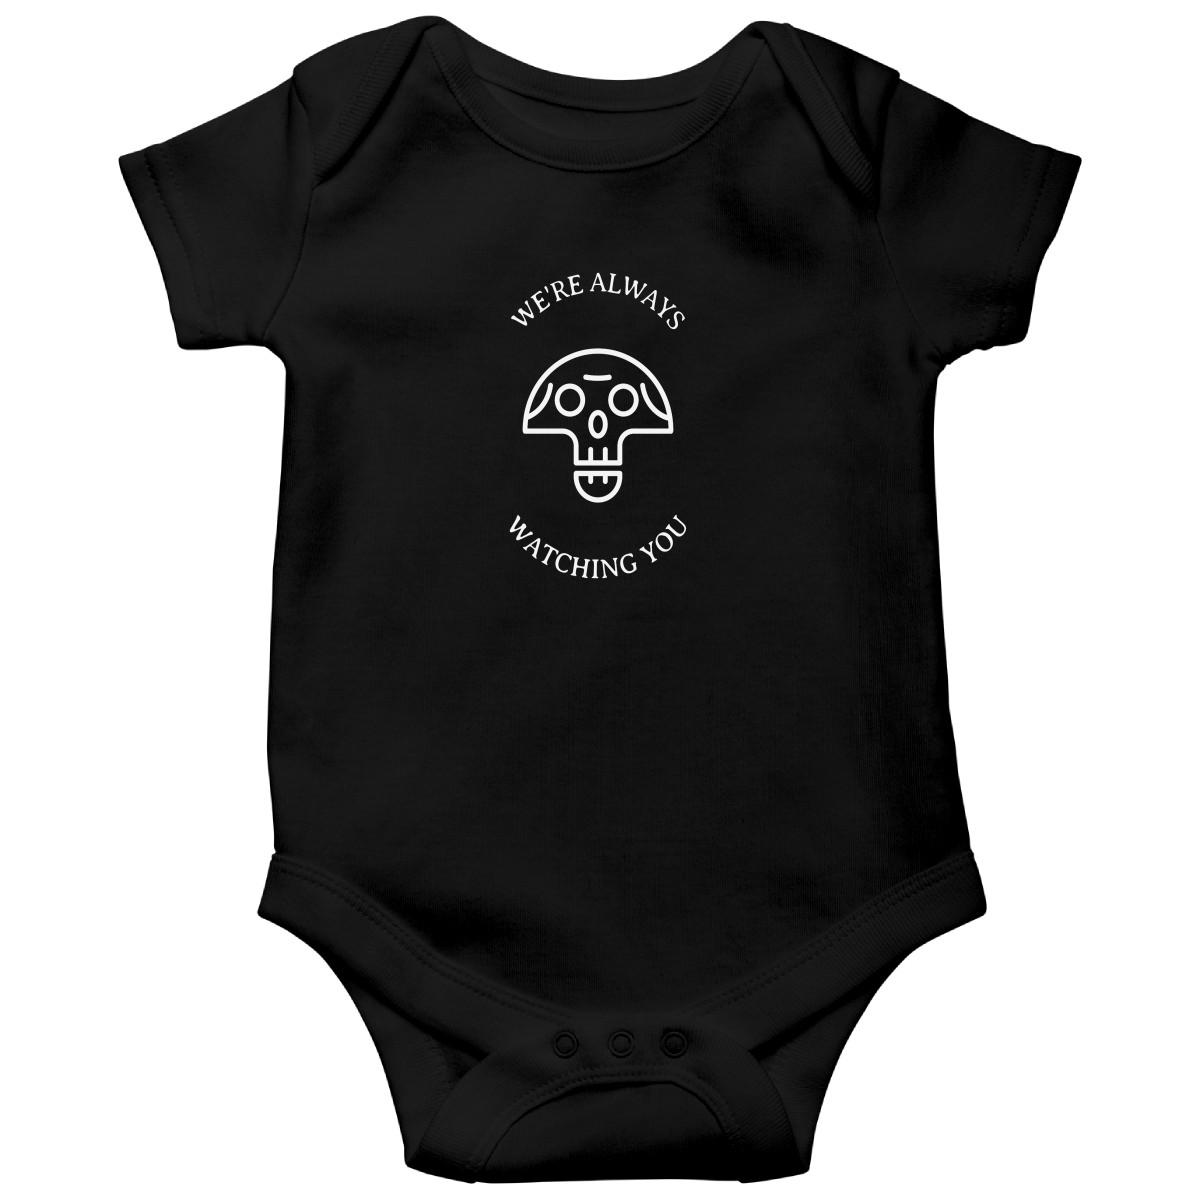 We're Always Watching You Baby Bodysuits | Black